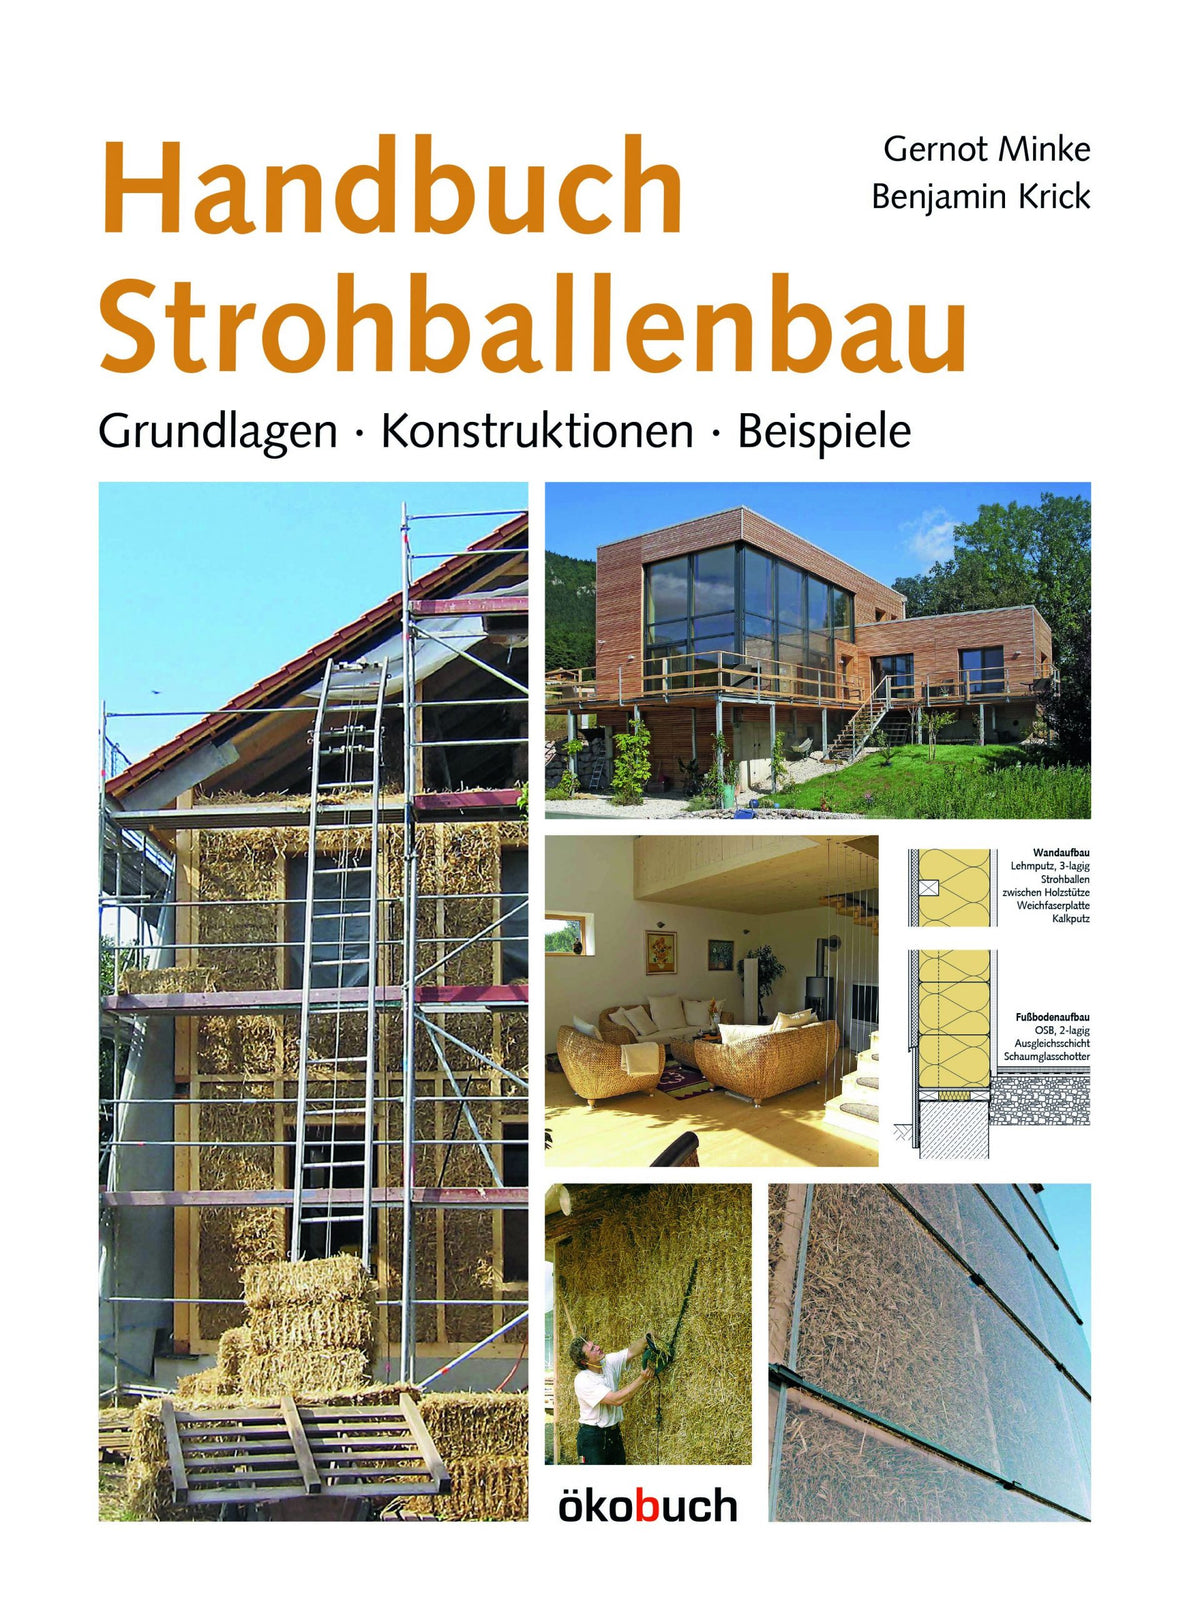 Gernot Minke, Benjamin Krick | Handbuch Strohballenbau